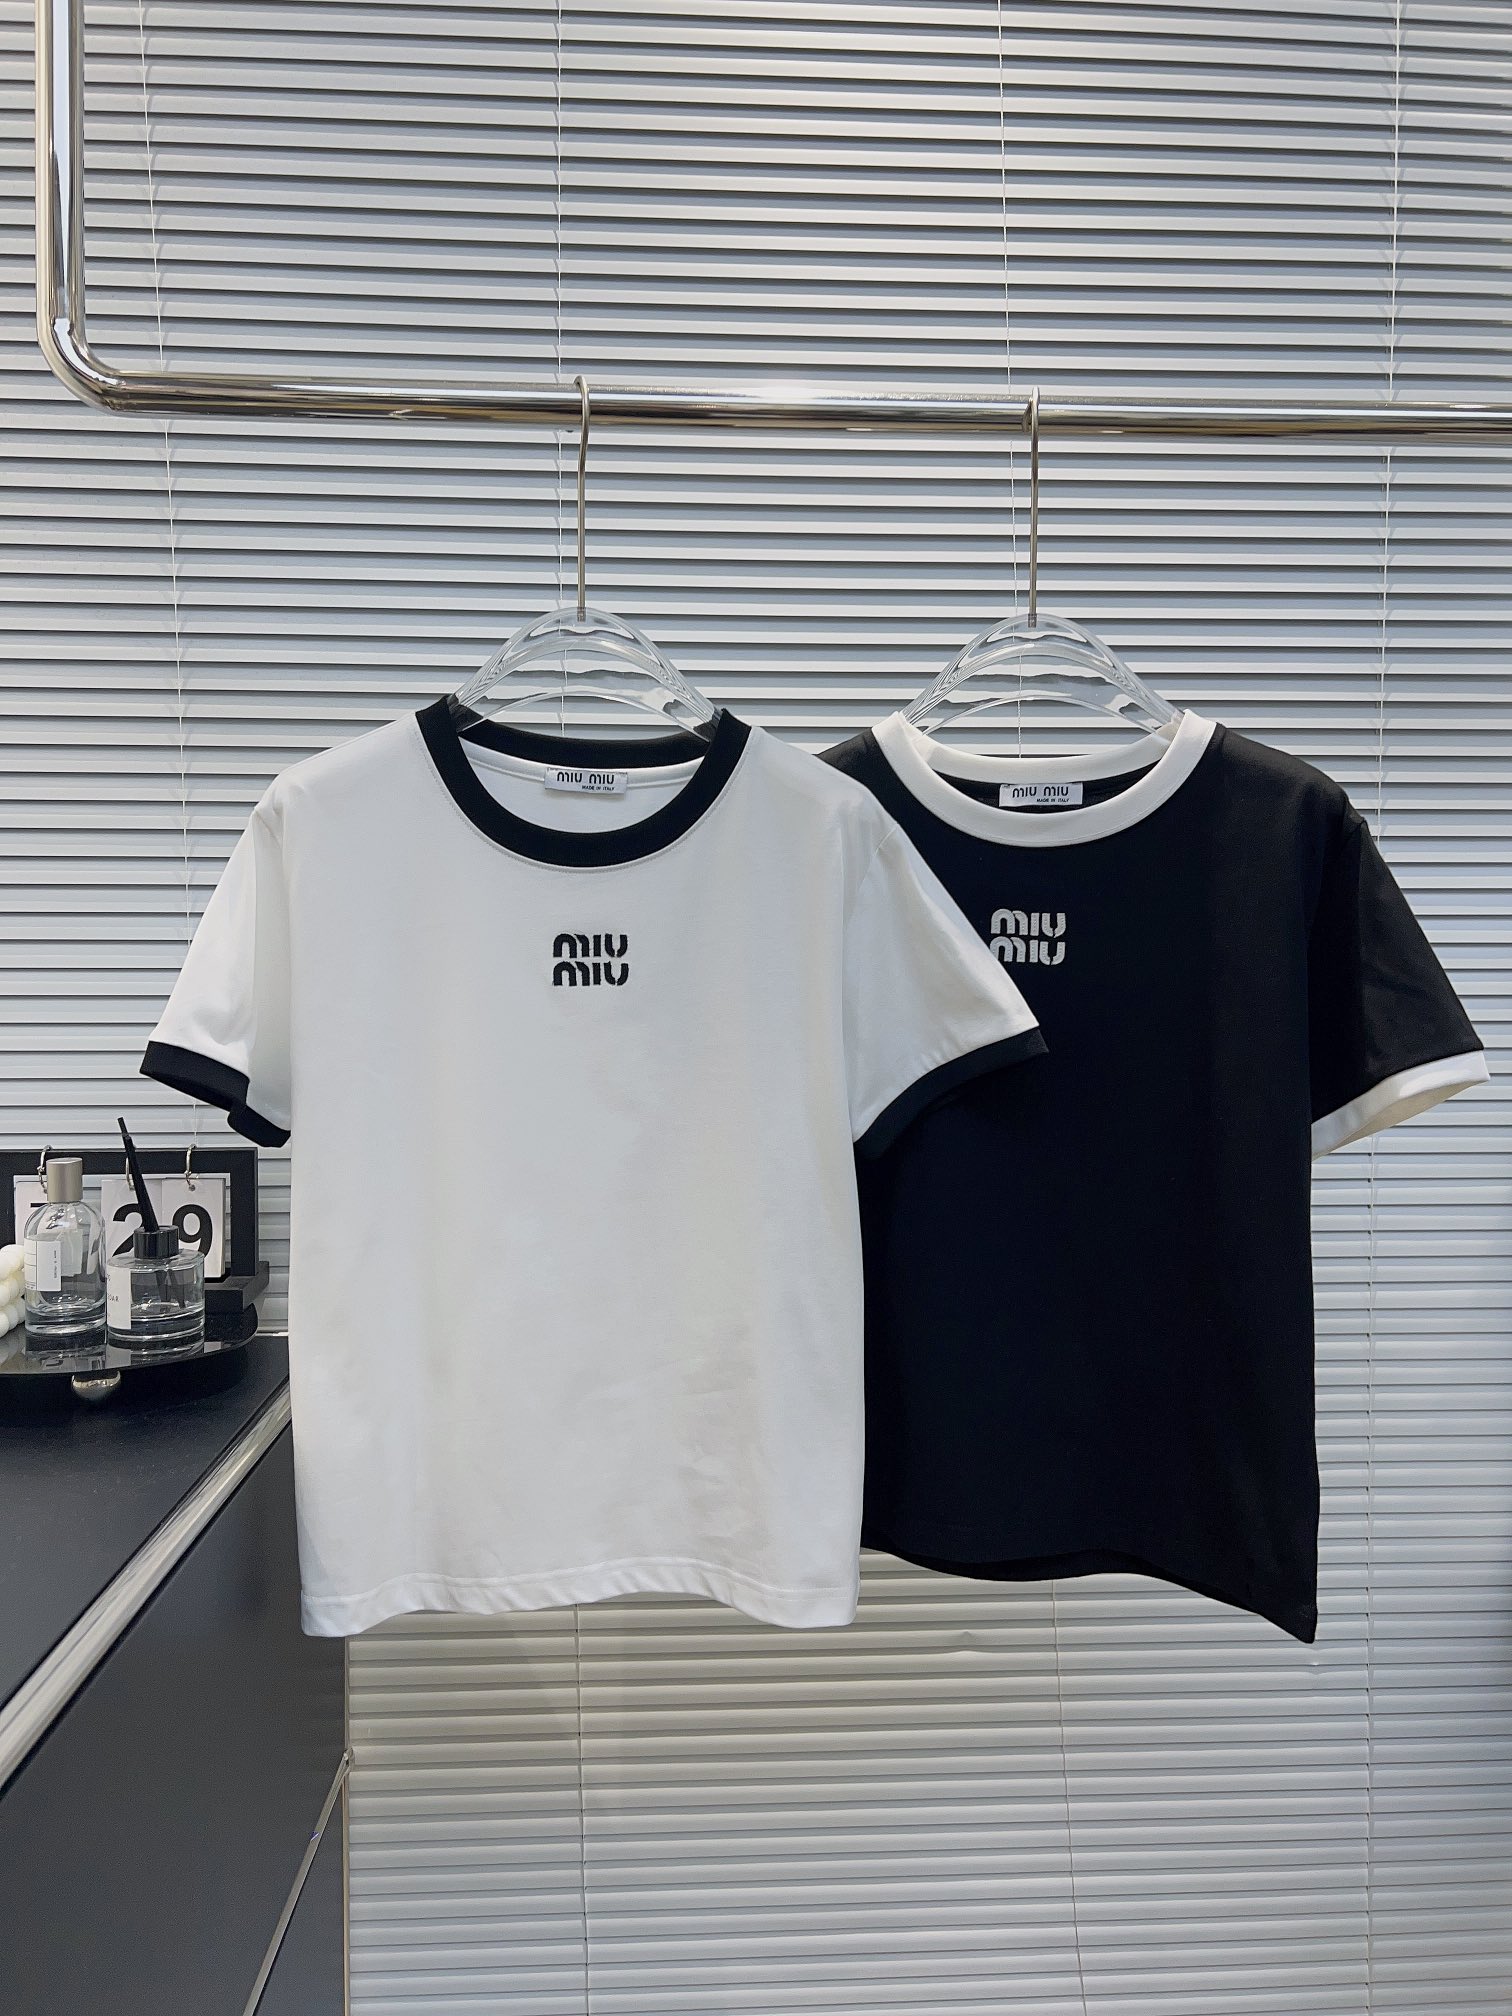 MiuMiu Clothing T-Shirt Black White Embroidery Knitting